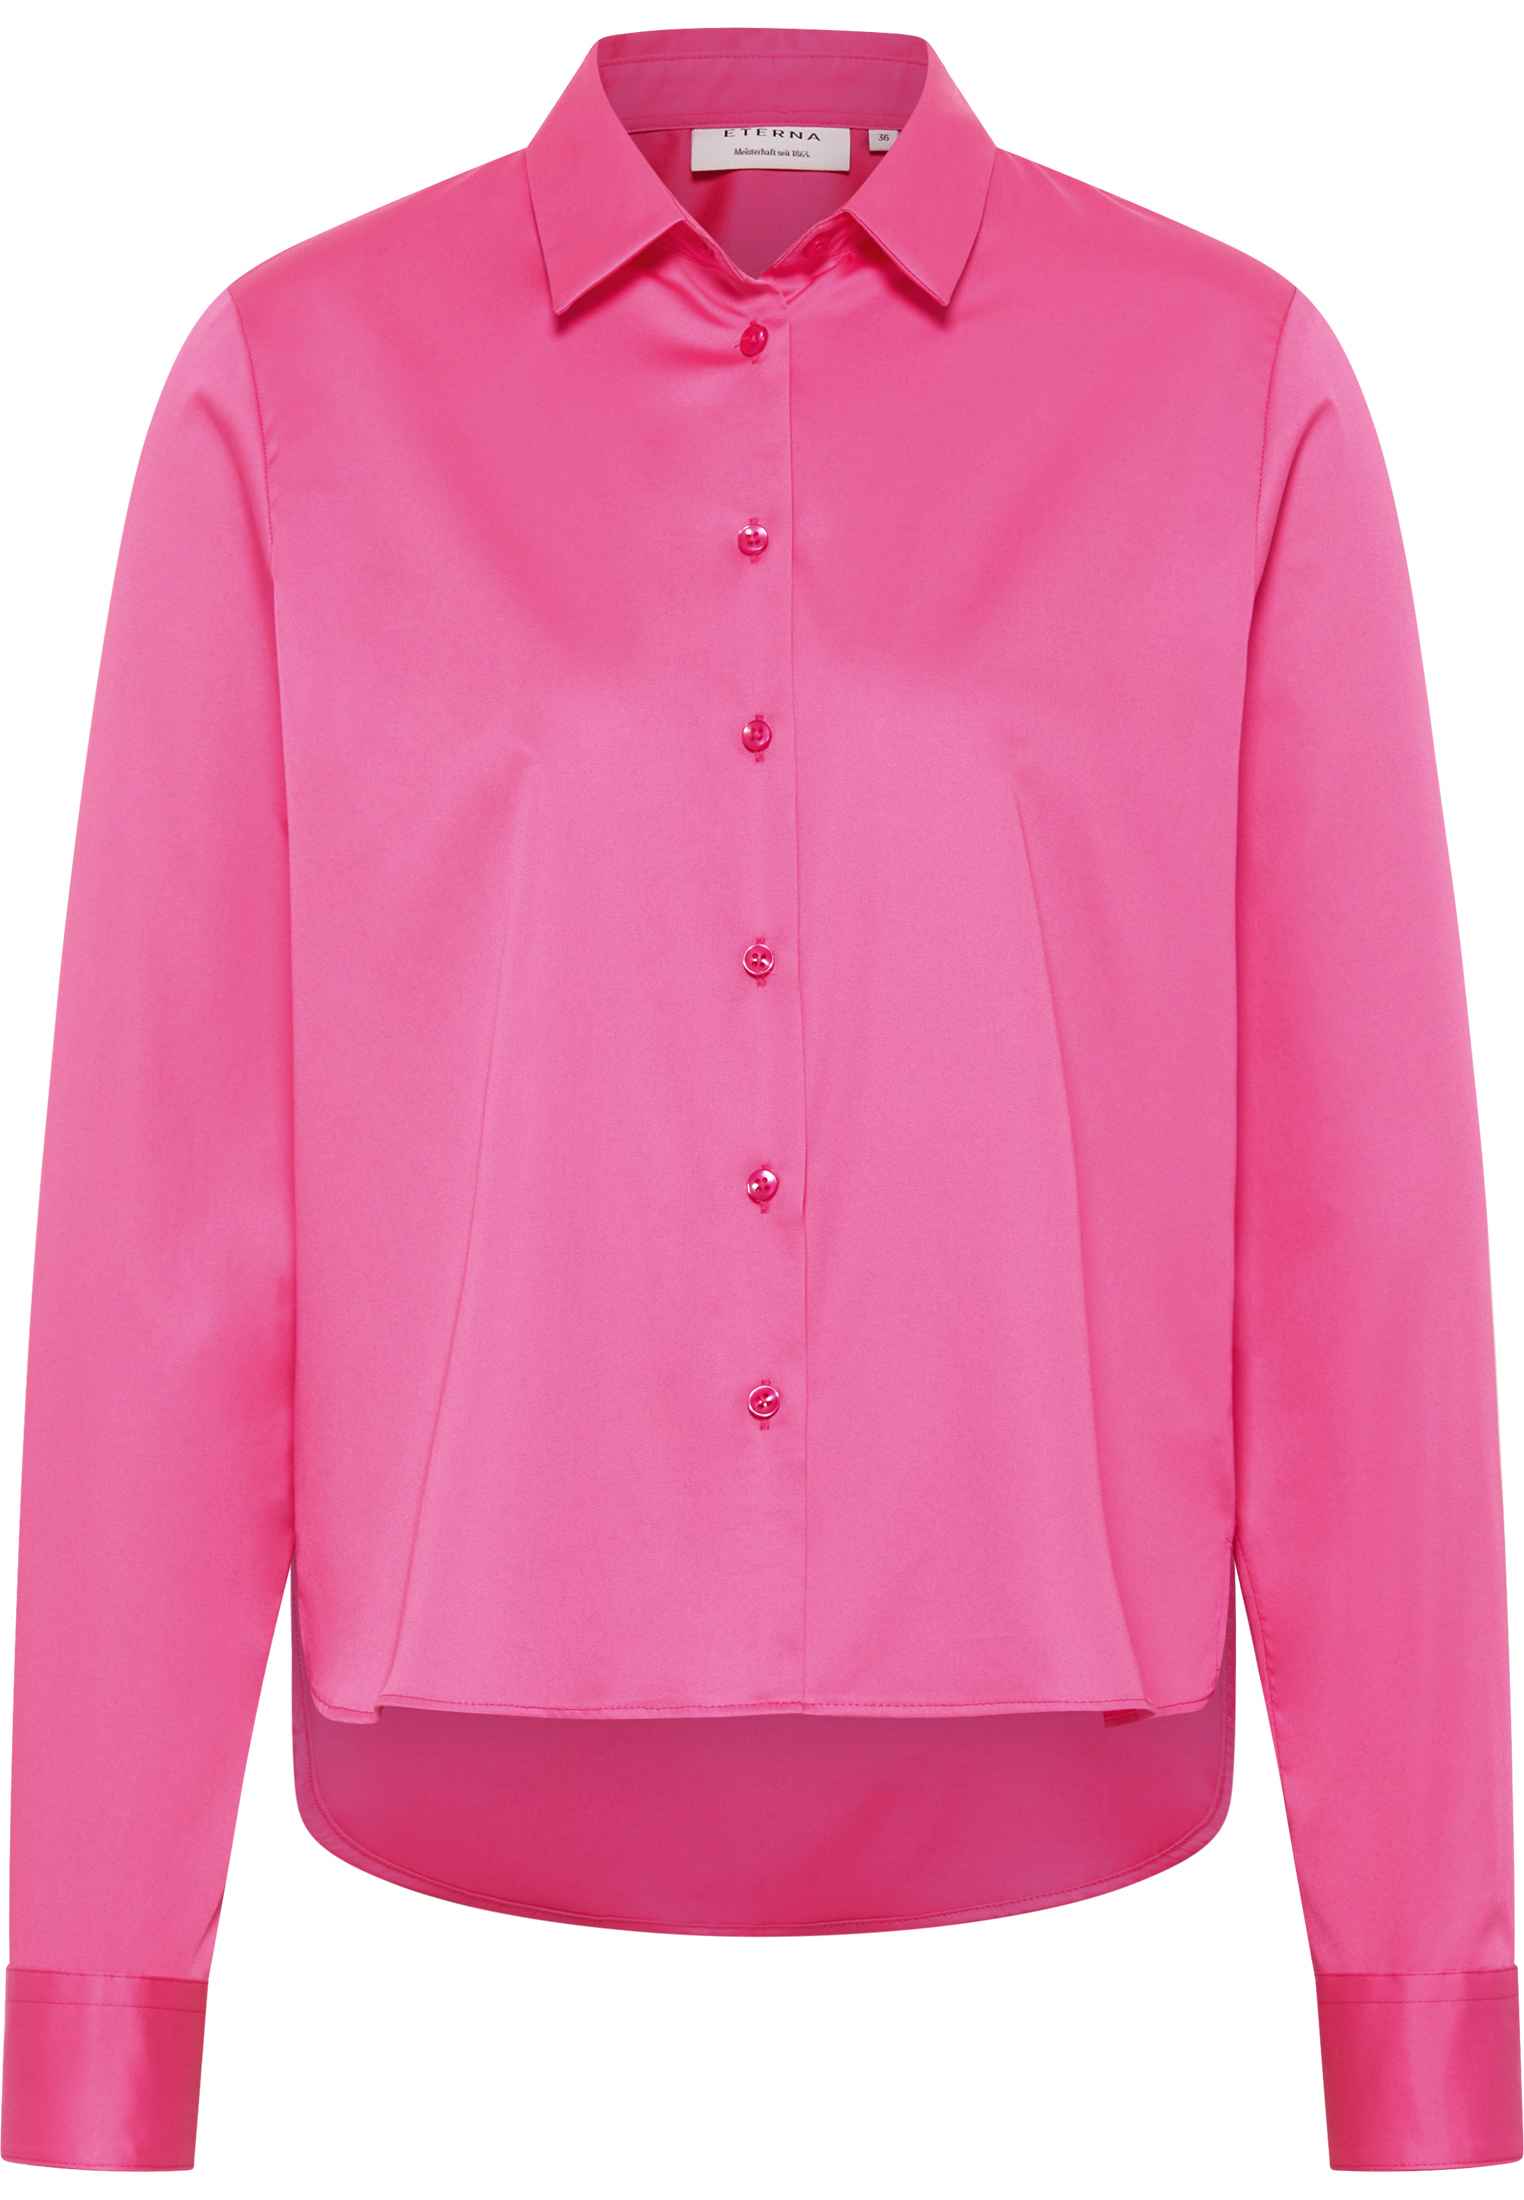 Satin long plain 52 | | Blouse in 2BL04469-15-21-52-1/1 sleeve pink | Shirt pink |